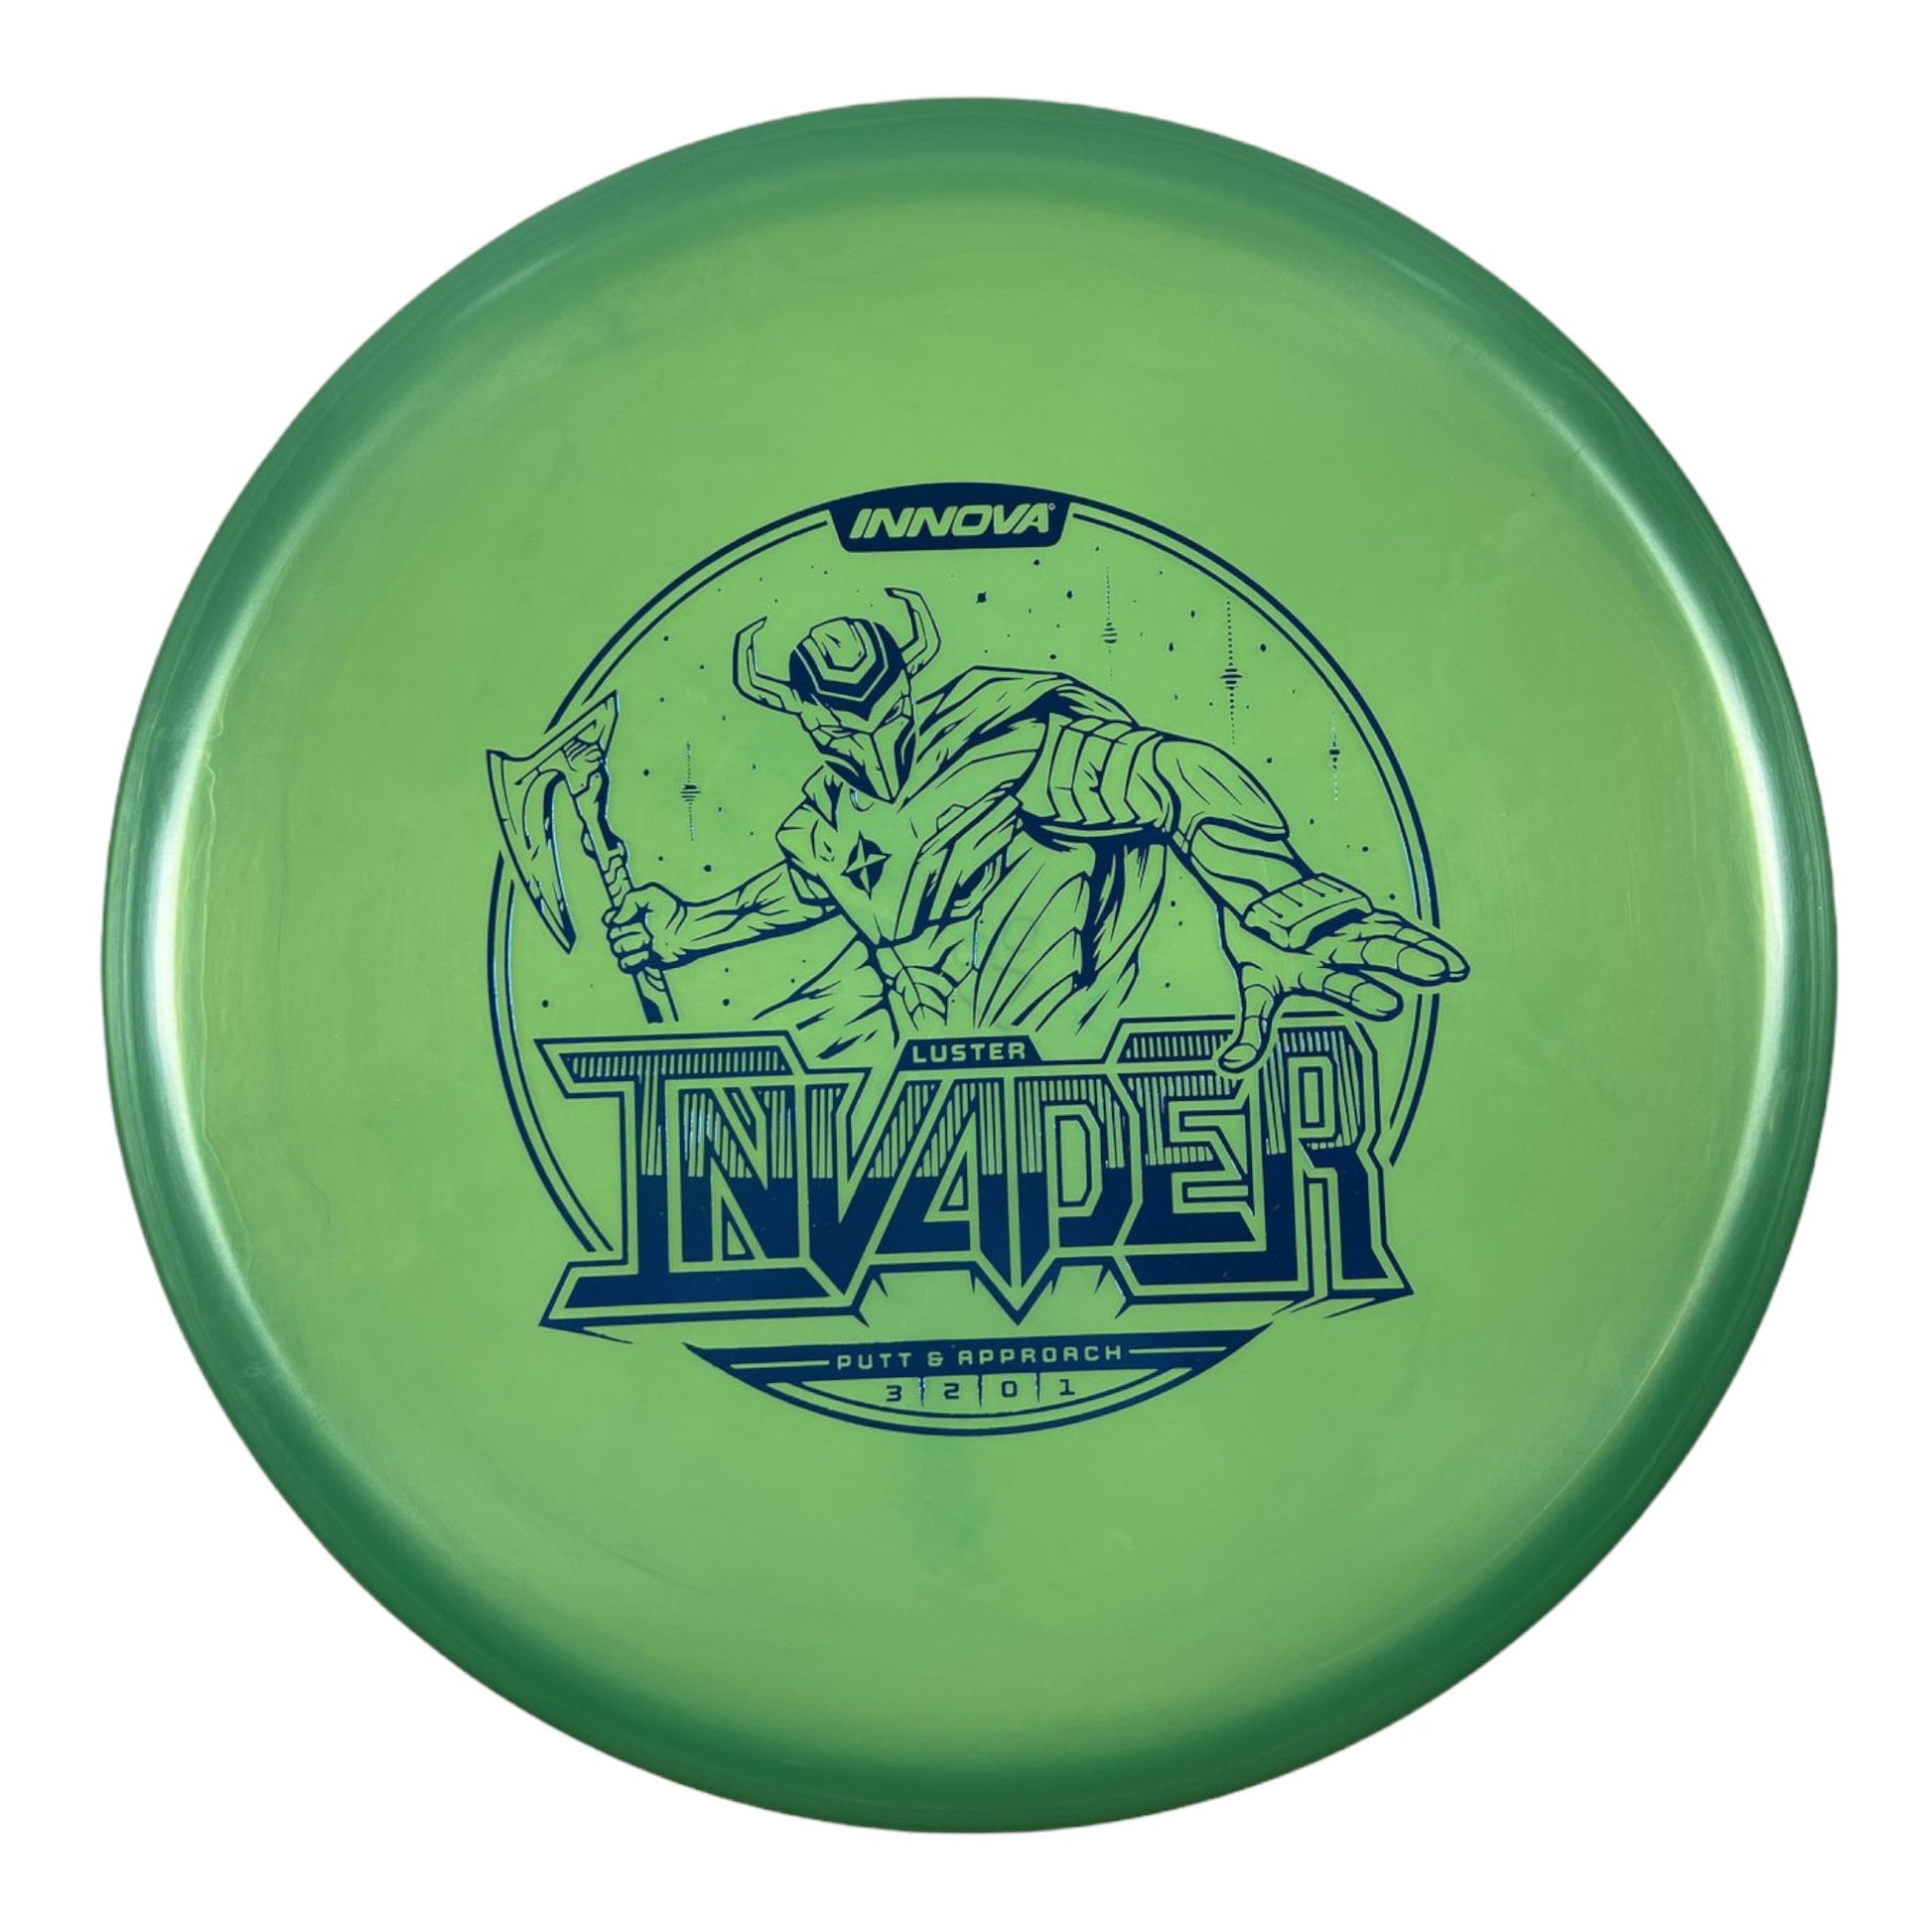 Innova Champion Discs Invader | Luster | Green/Blue 170g Disc Golf